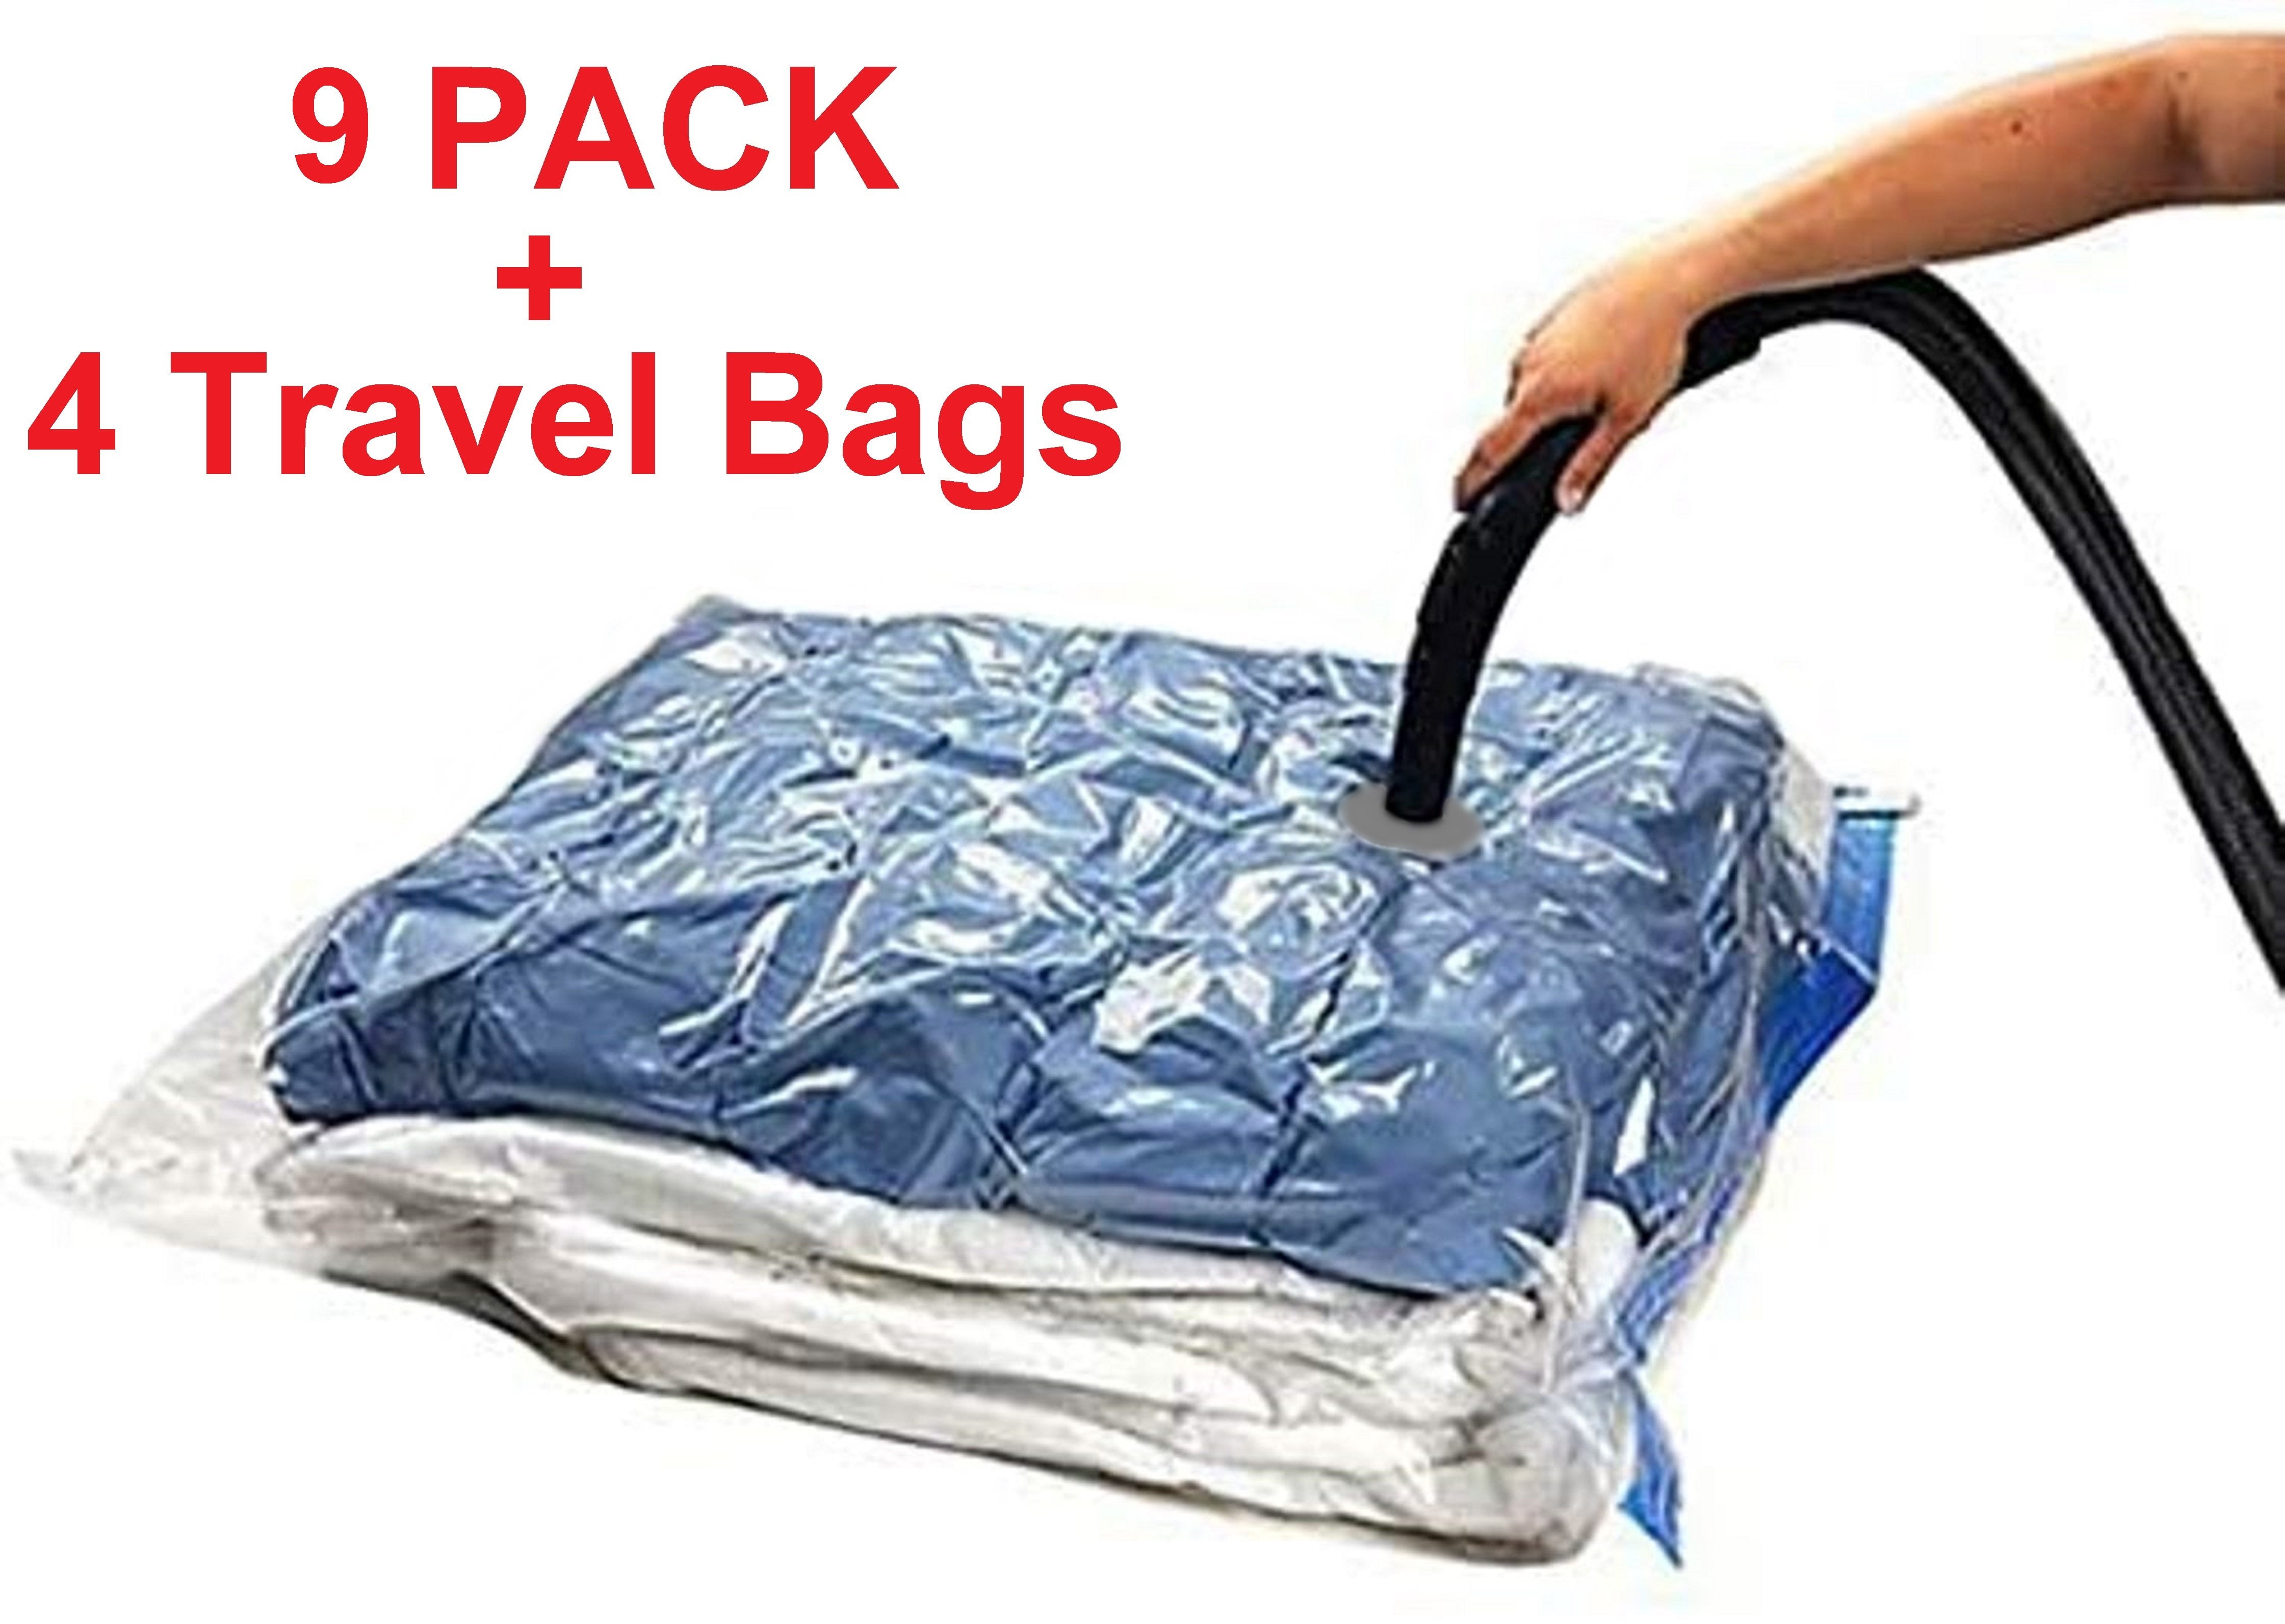 Black & Decker Vacuum Storage Bags - Suitcase Space Bag & Travel Vacuum Set